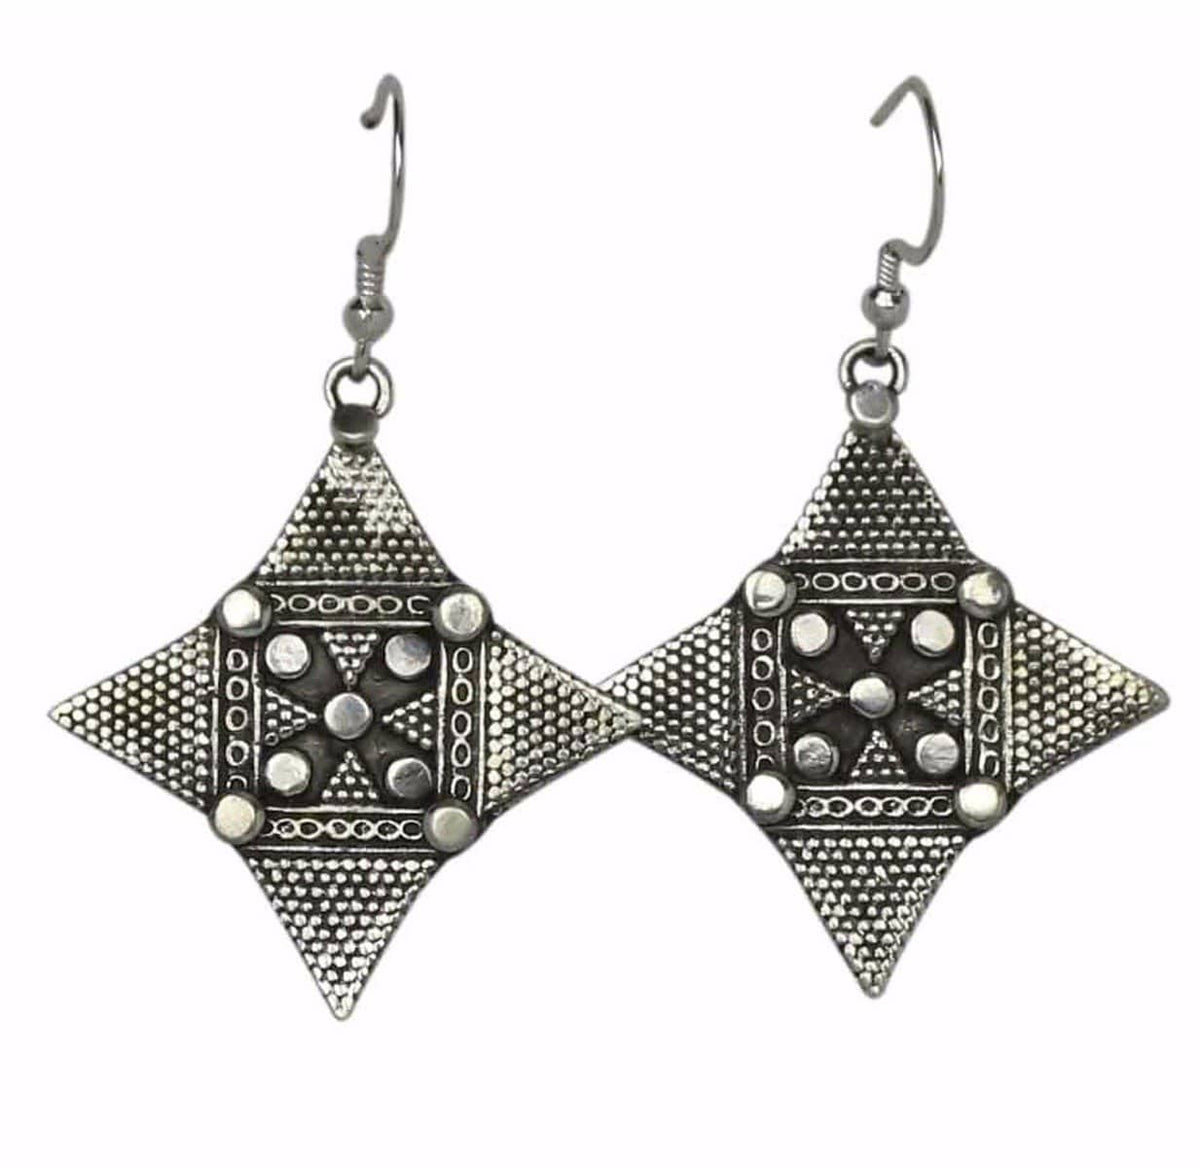 Solid Sterling silver geometric earrings